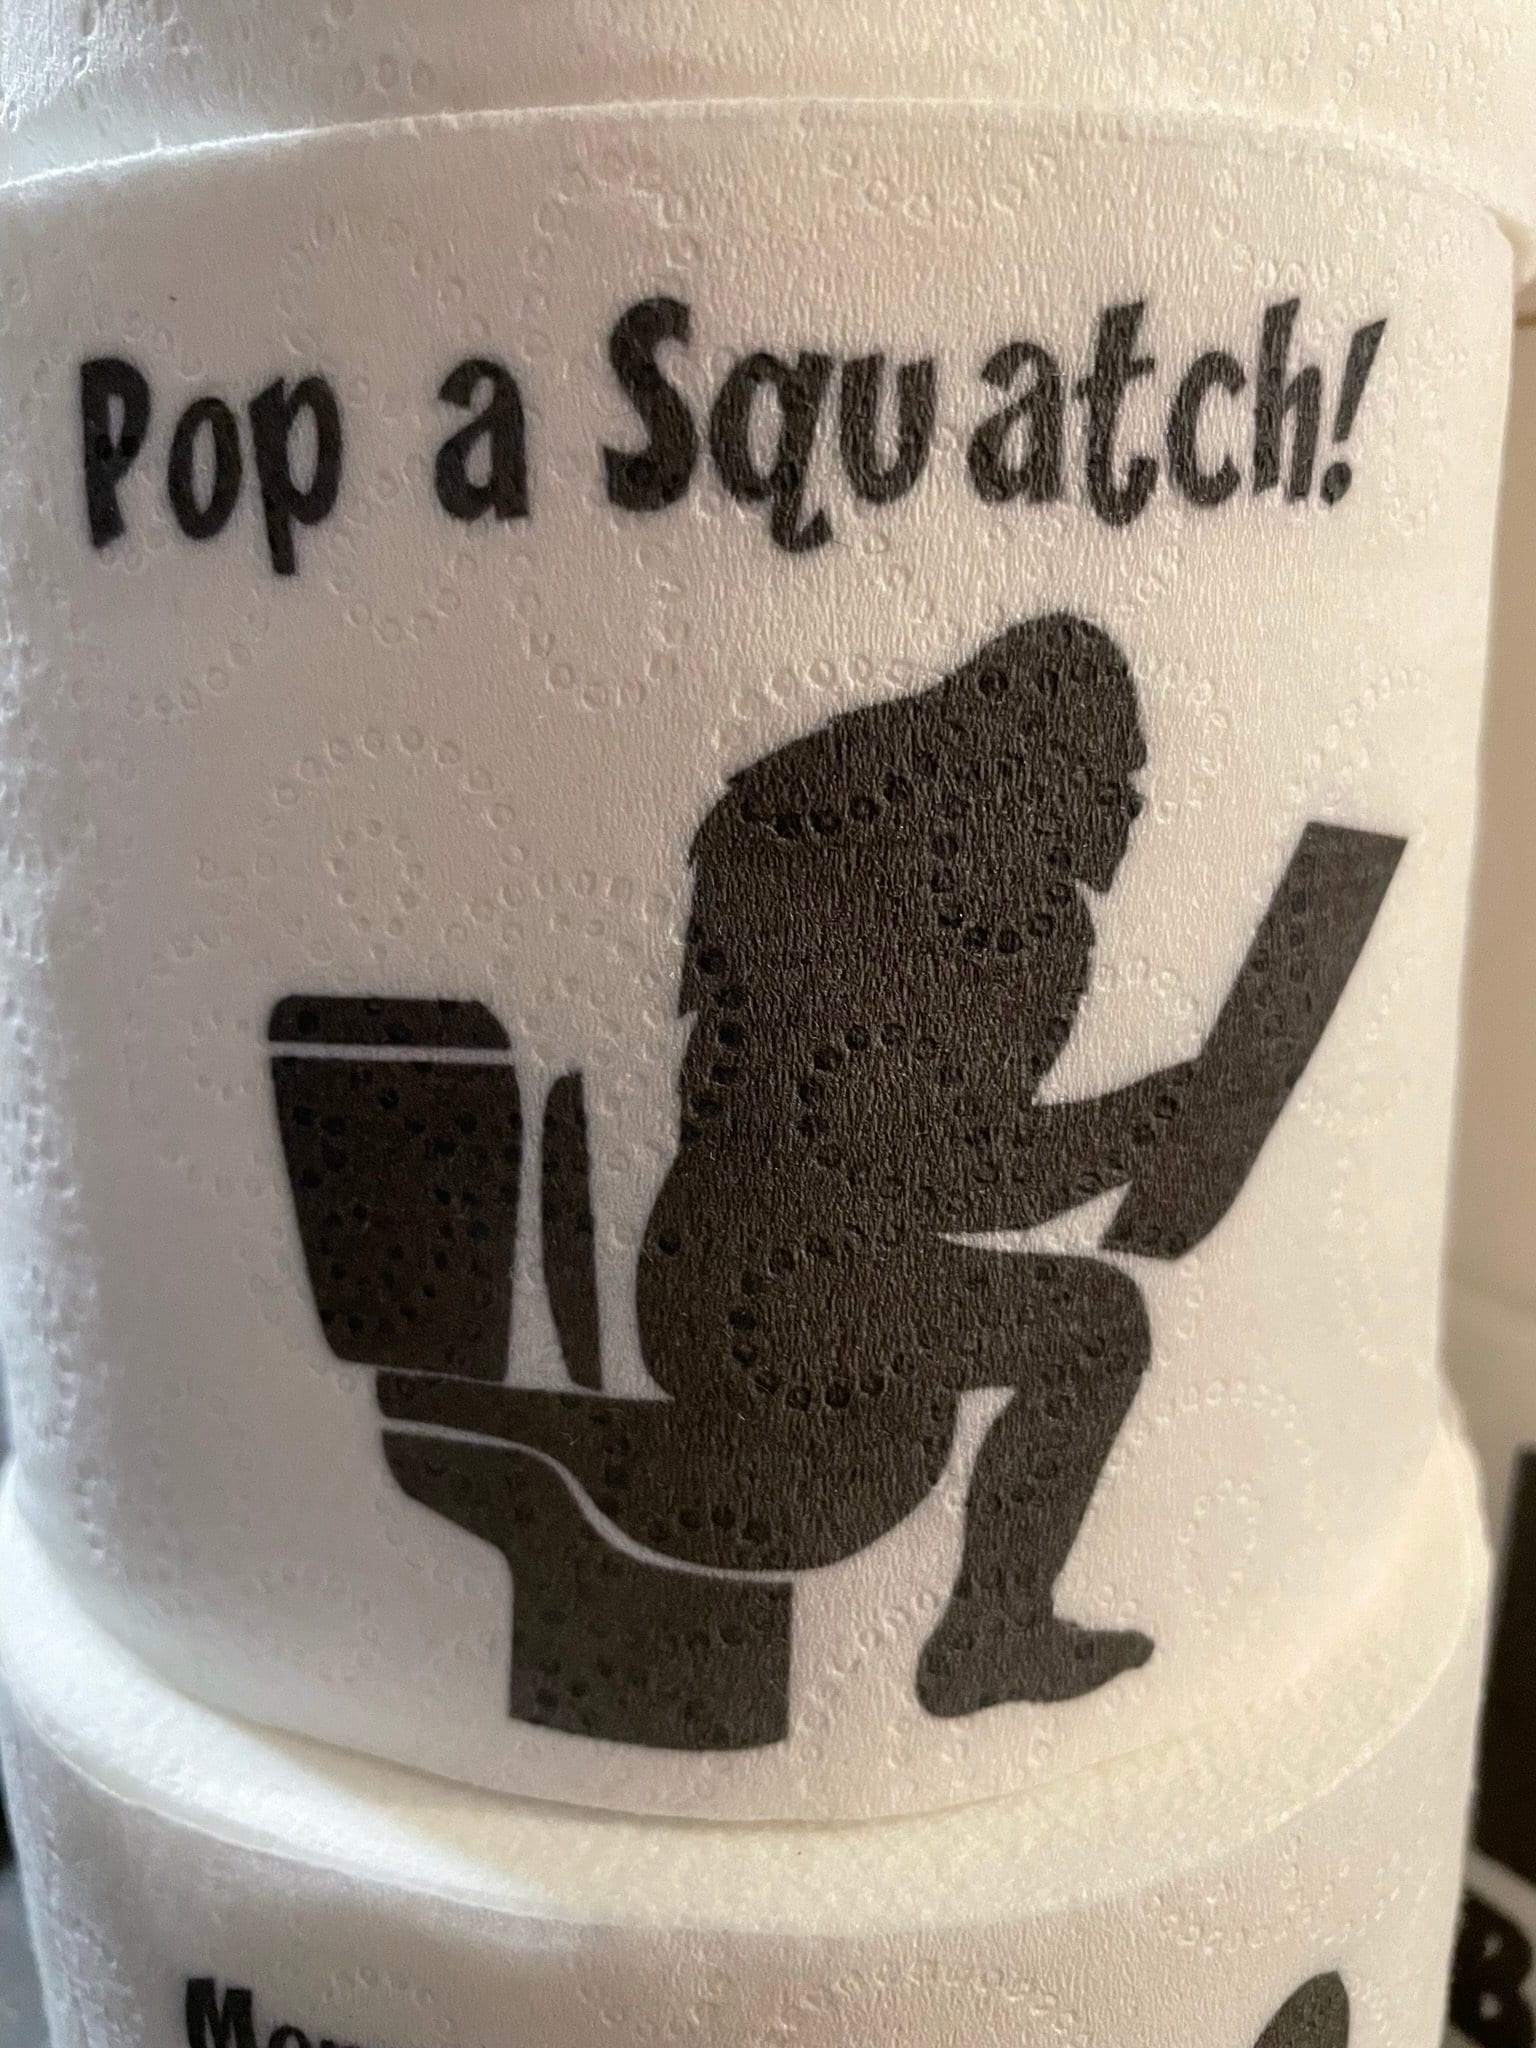 Santa Squatch Bigfoot wash rag, hand towel, bath towel set or individual -  bathroom decor